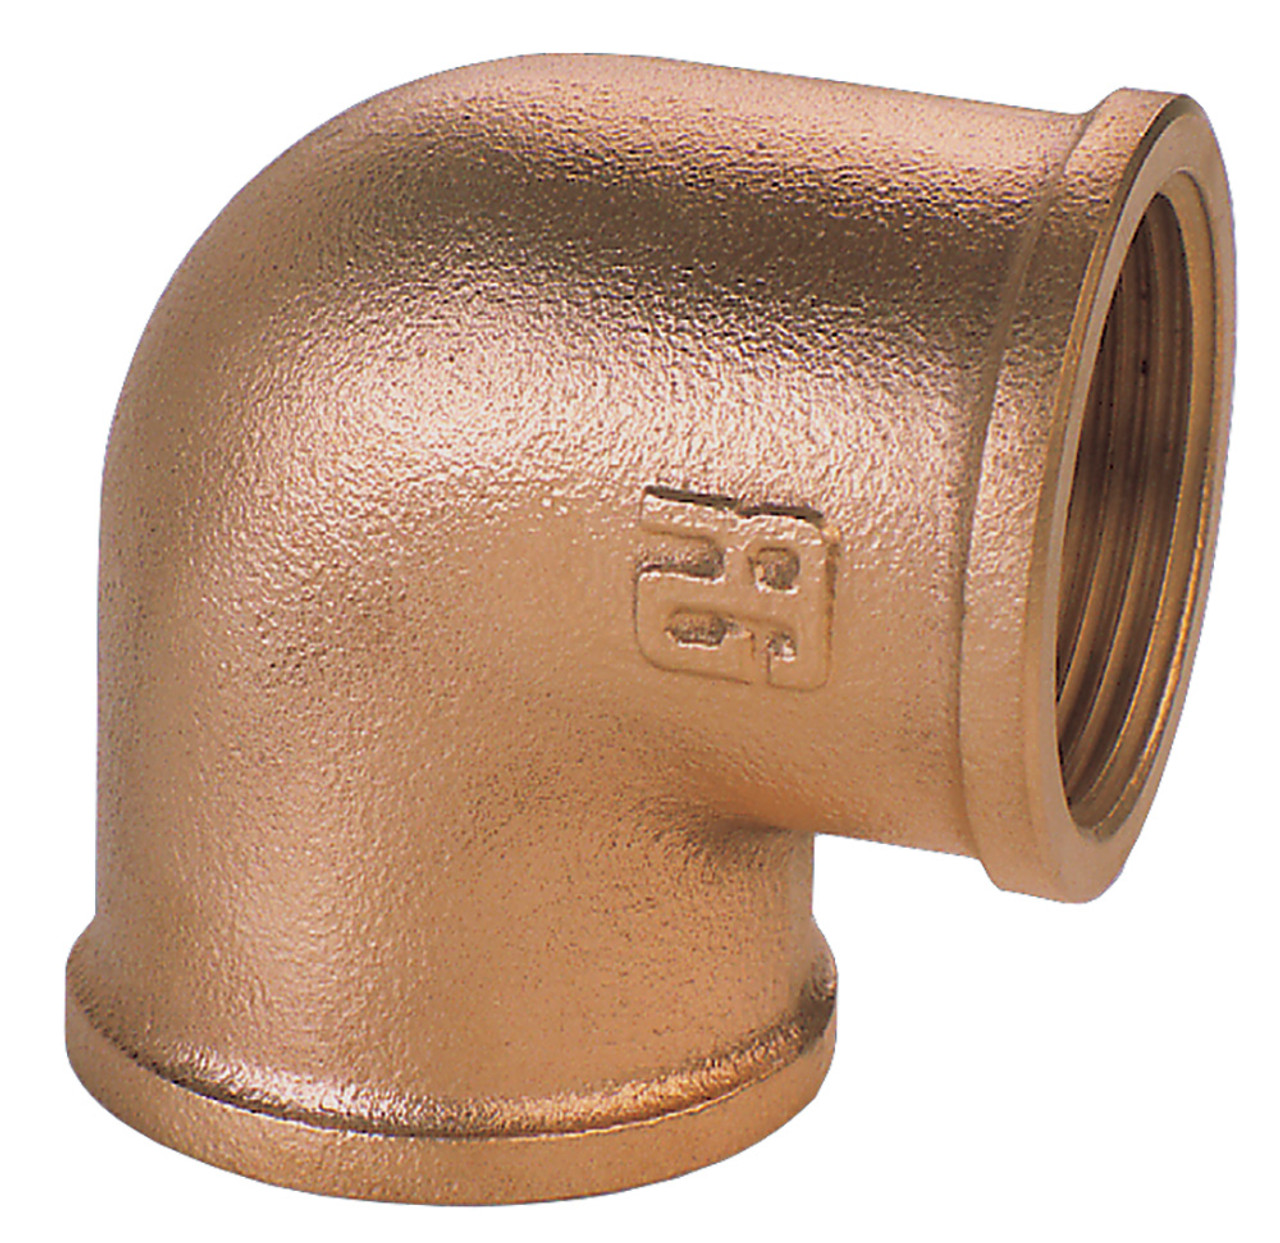 Guidi Bronze 90 degree elbow 0090B | Environmental Marine